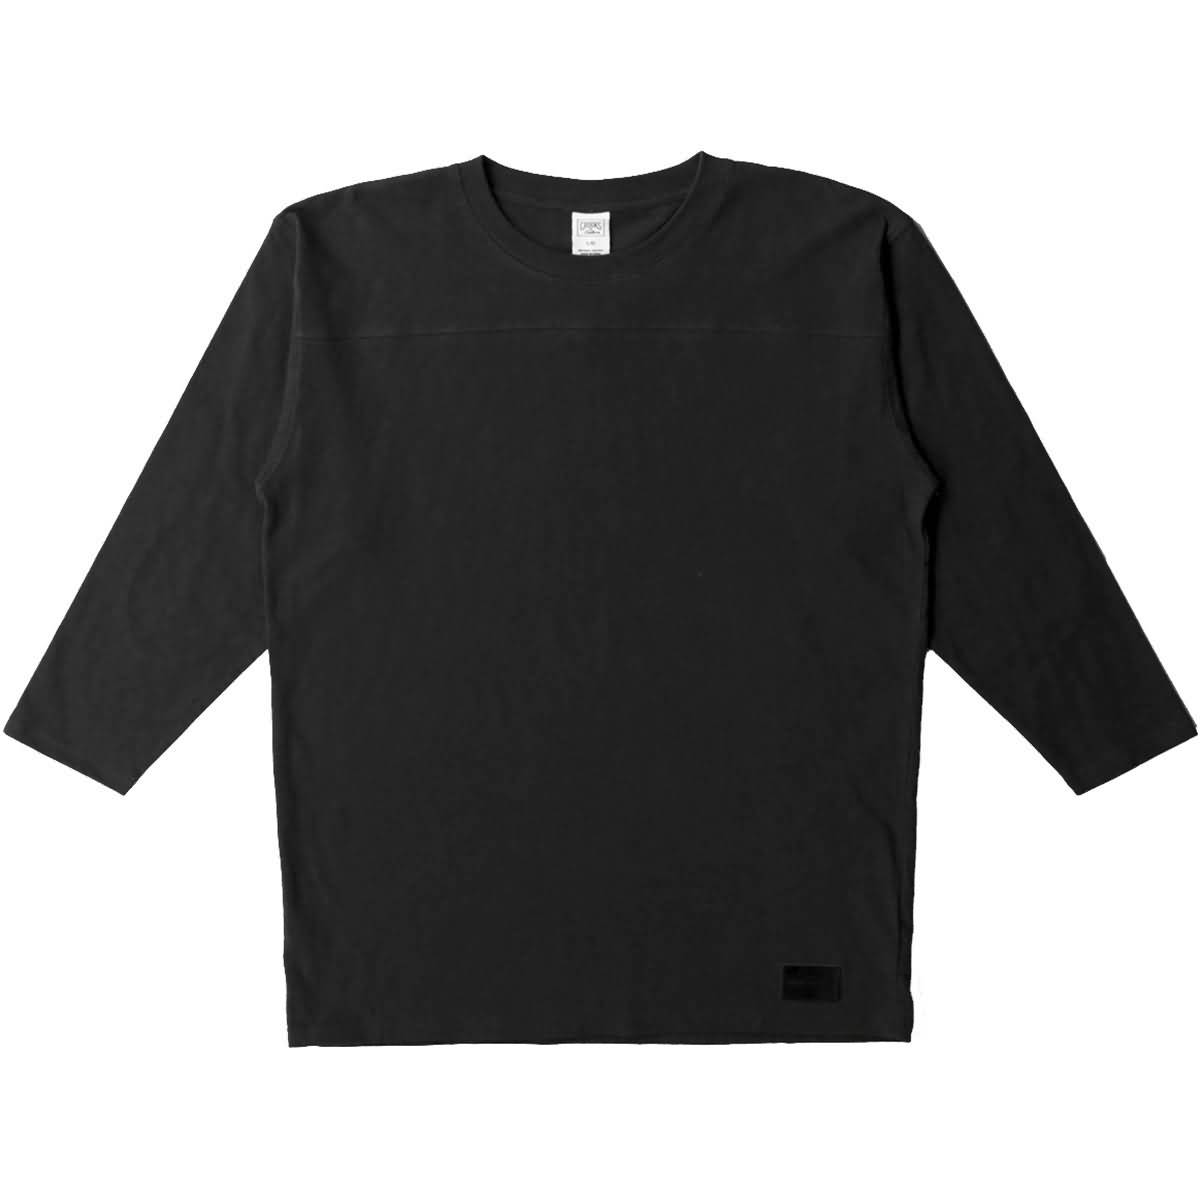 Crooks & Castles Walsh Men's Short-Sleeve Shirts-I1690108